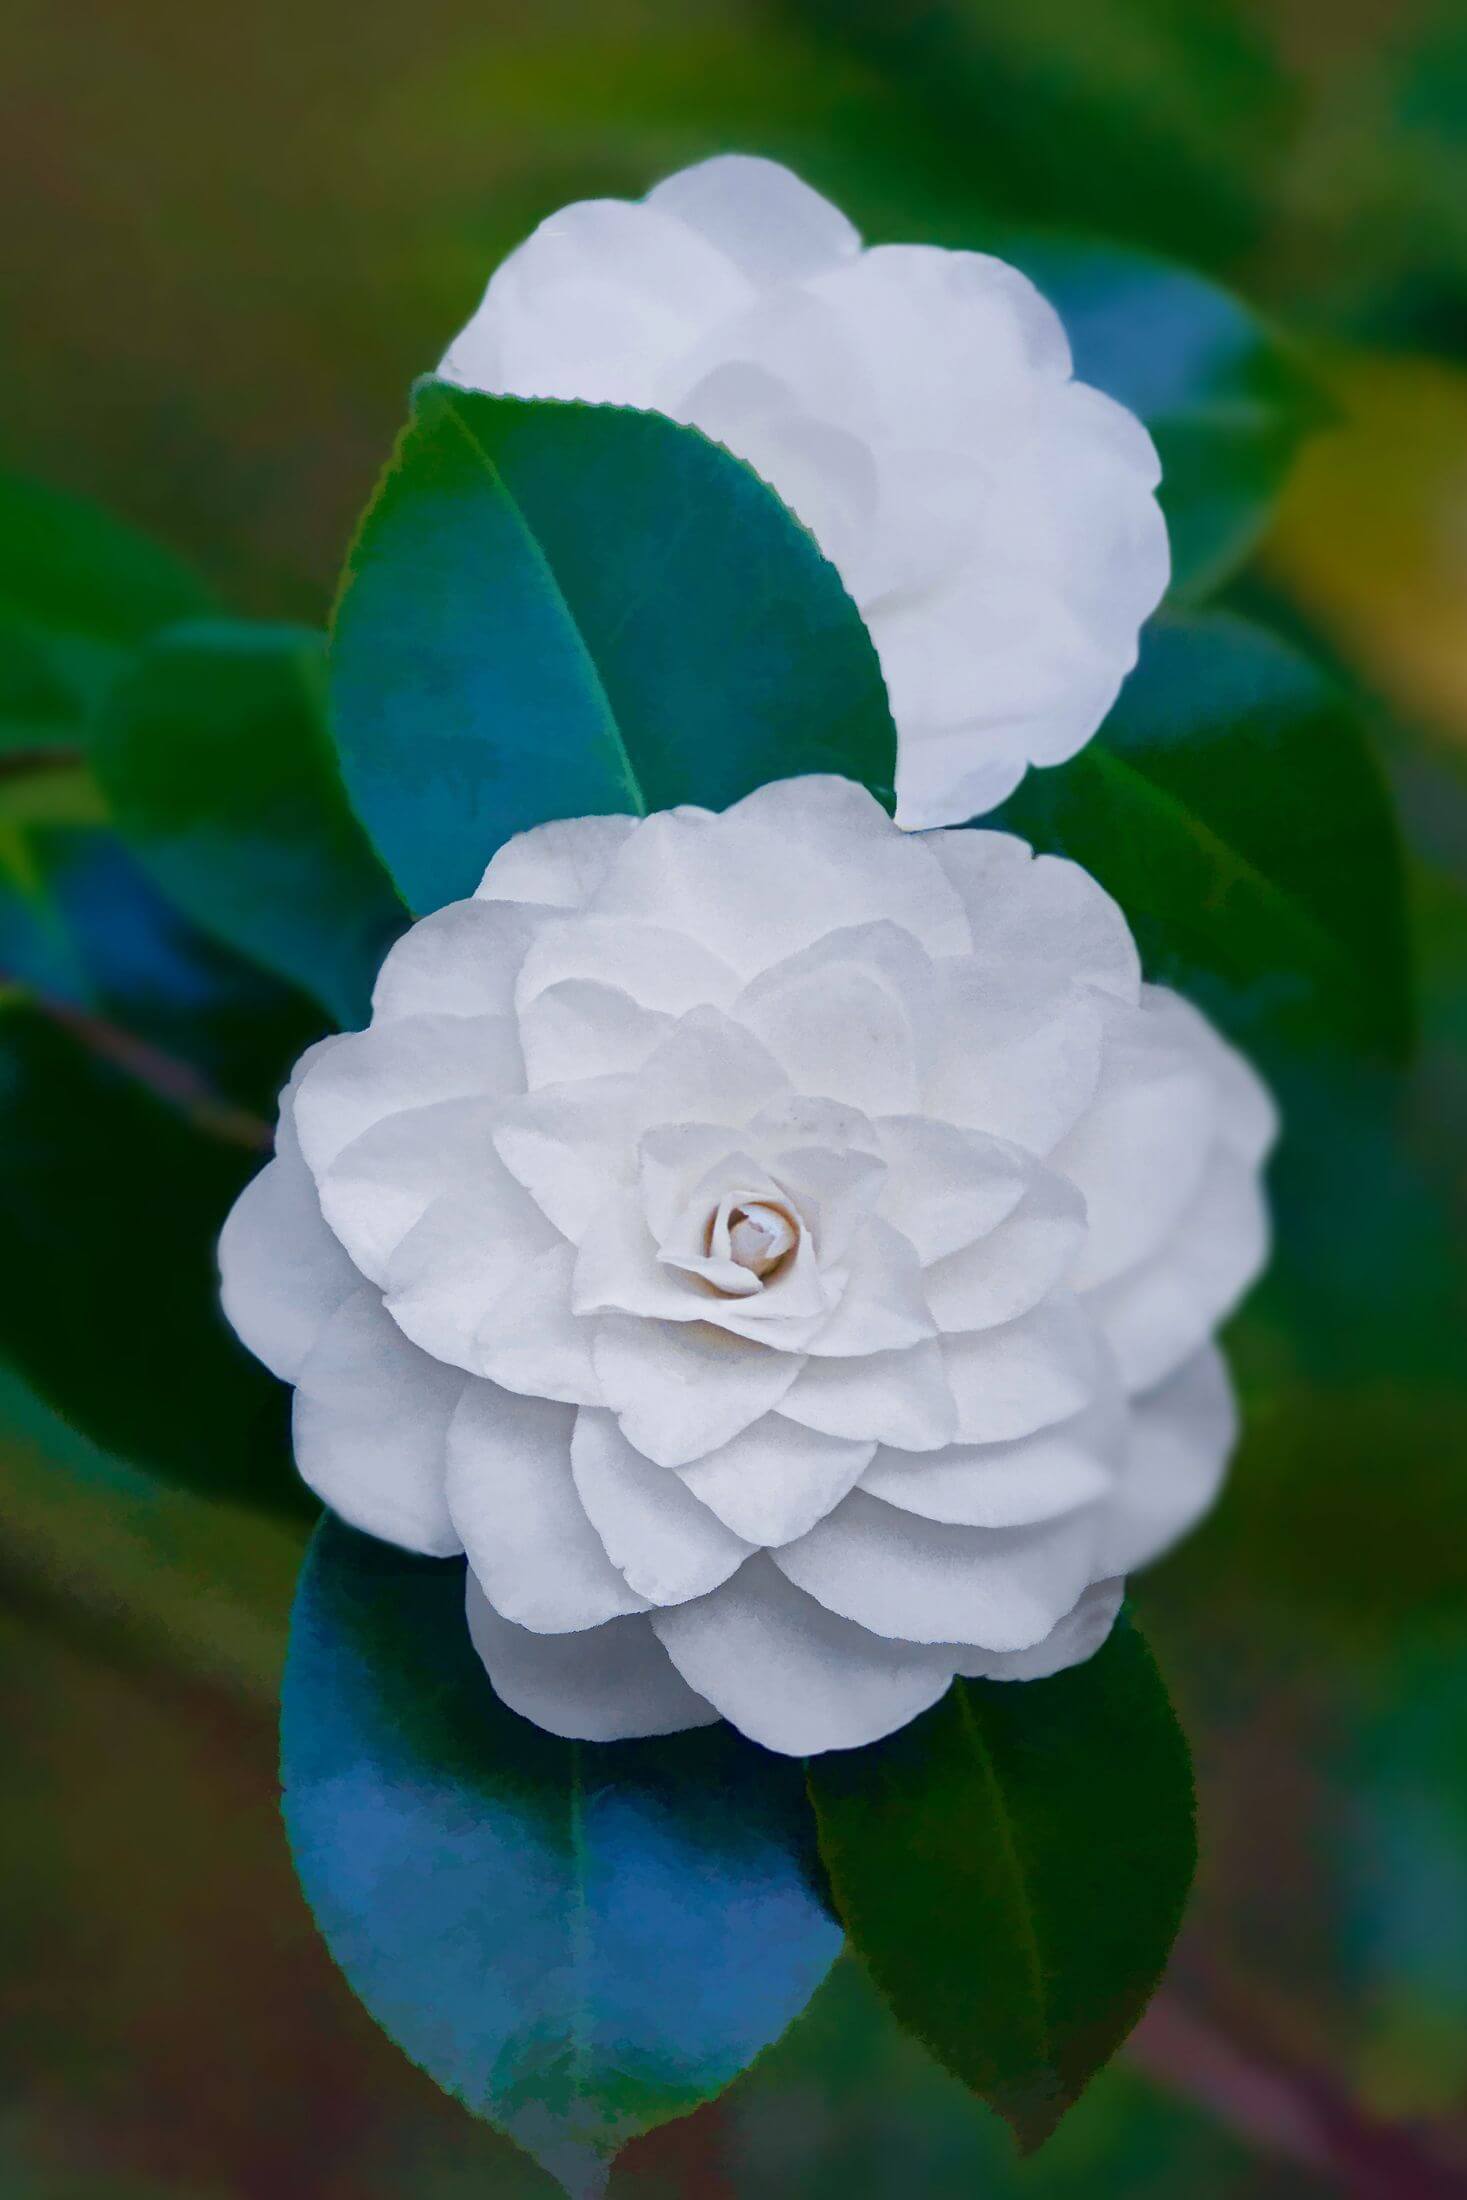 White camellia flowers.